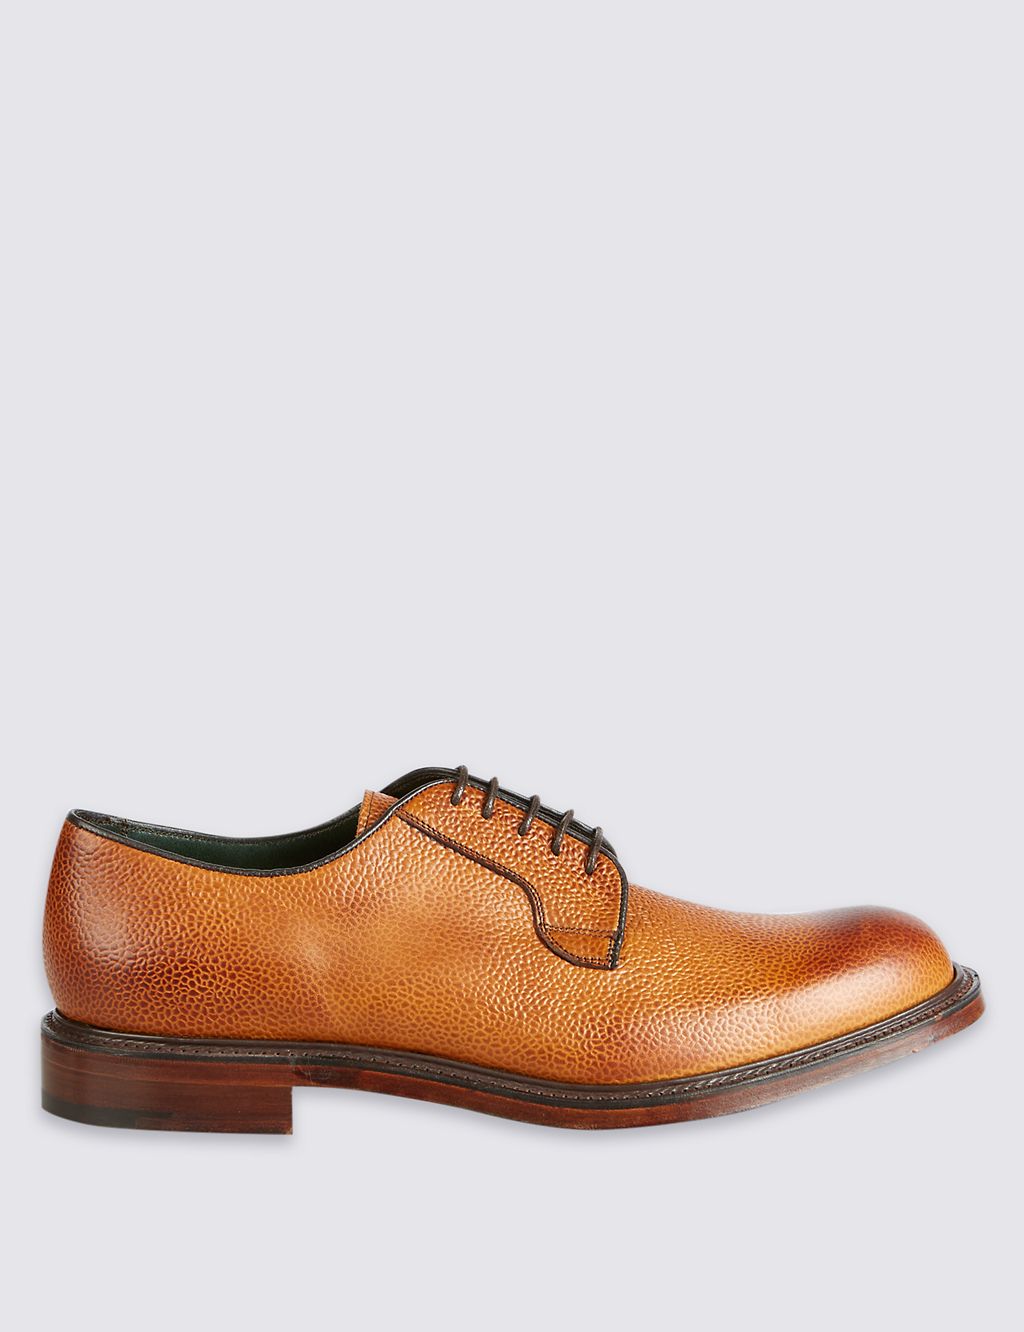 Luxury Derby Shoe in Tan Scotchgrain Leather 1 of 5